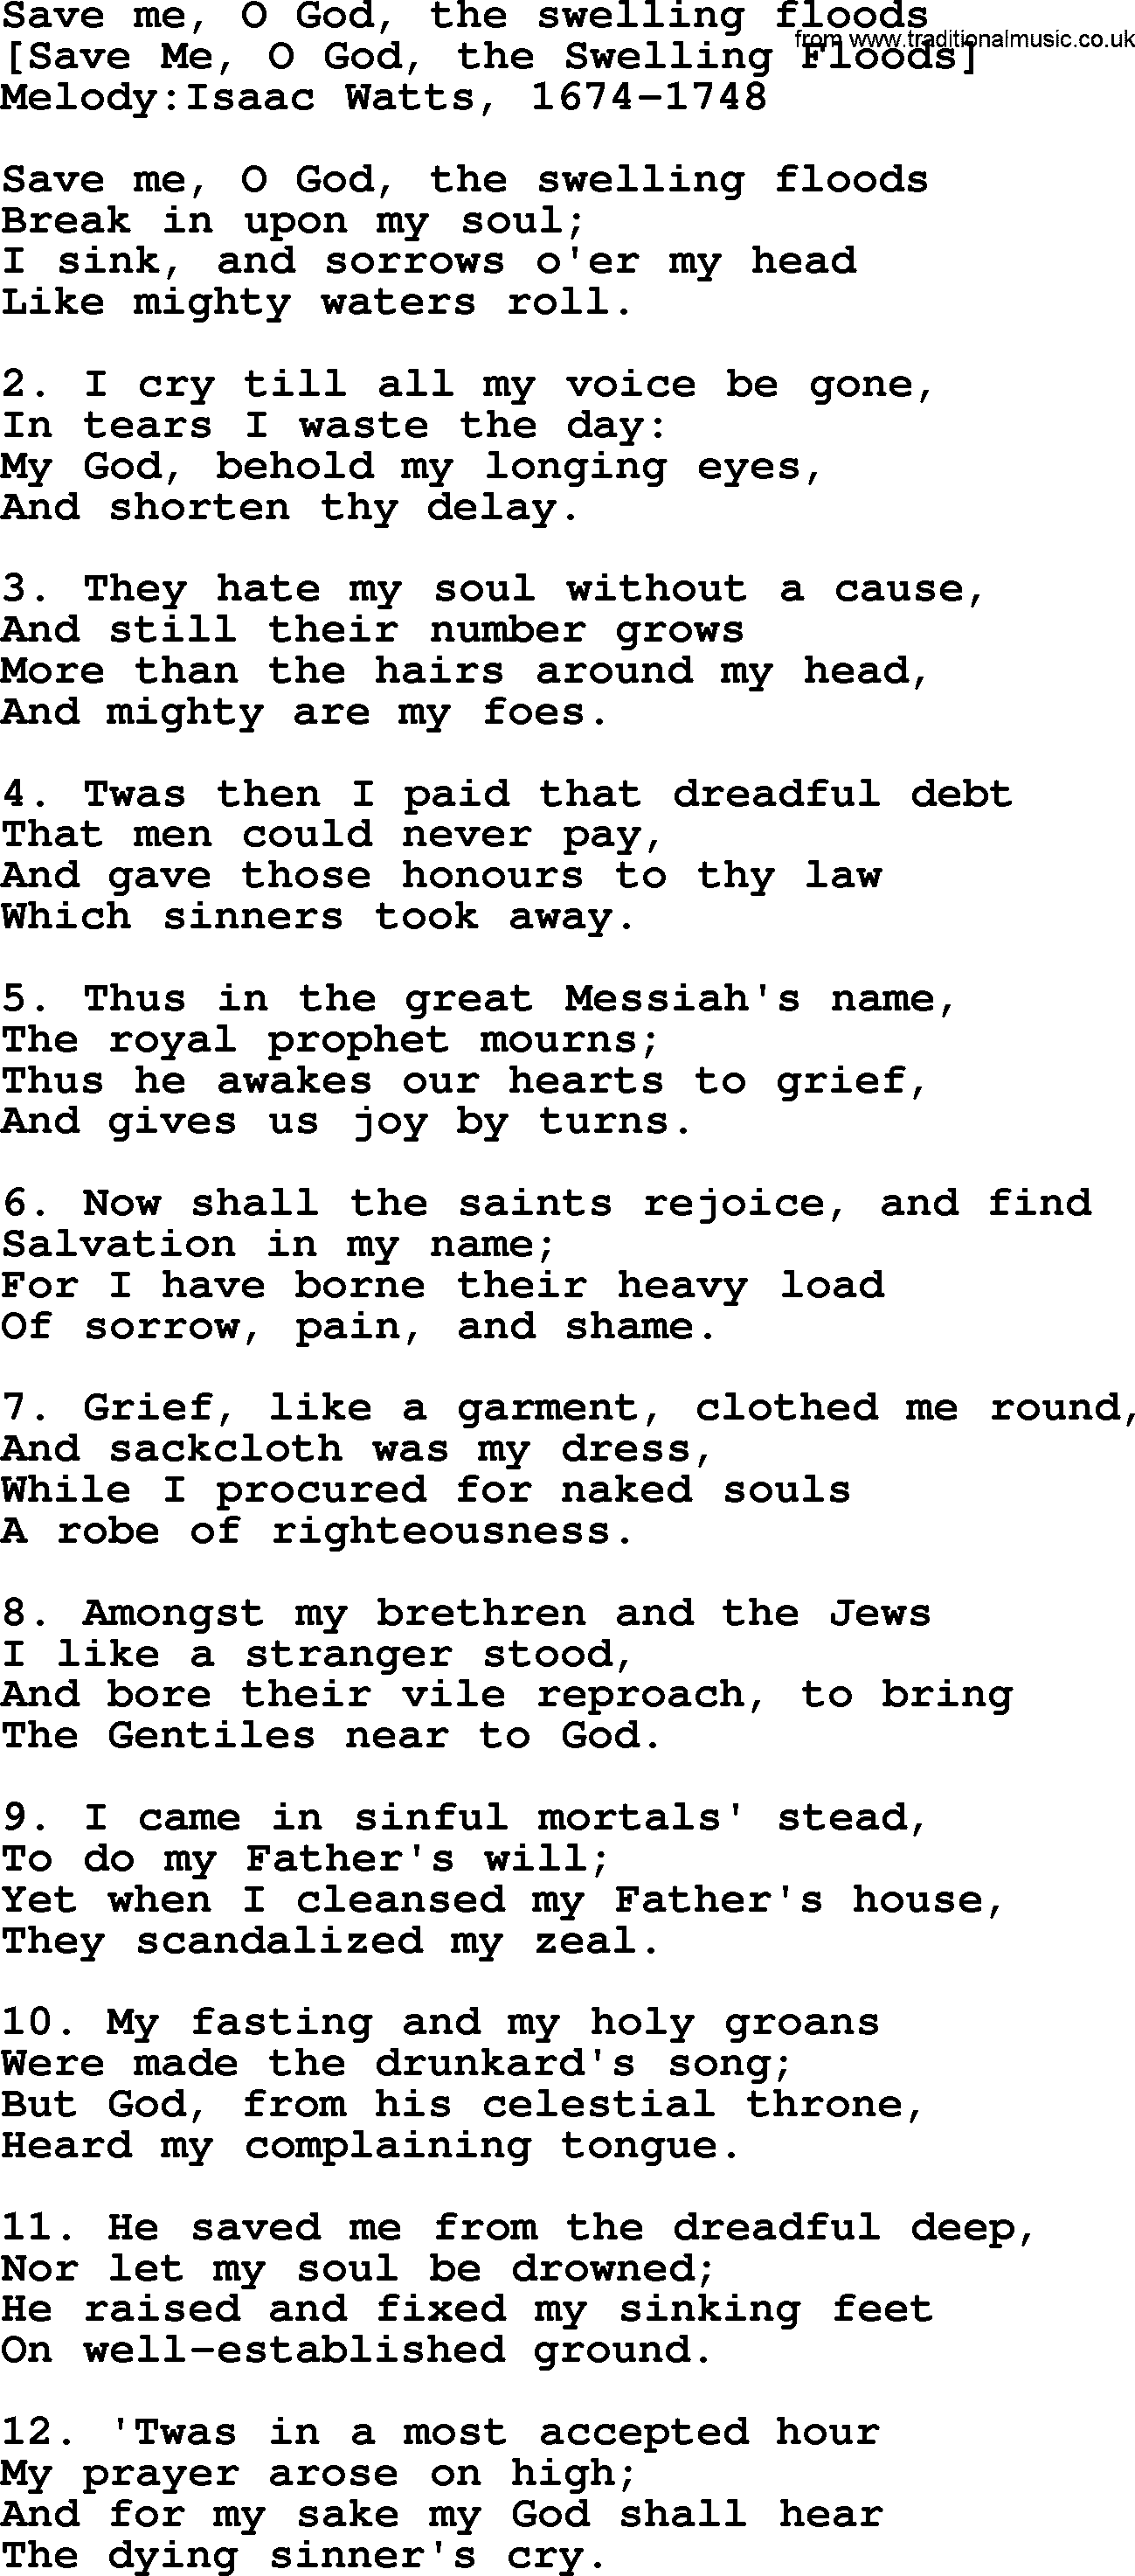 Old English Song: Save Me, O God, The Swelling Floods lyrics